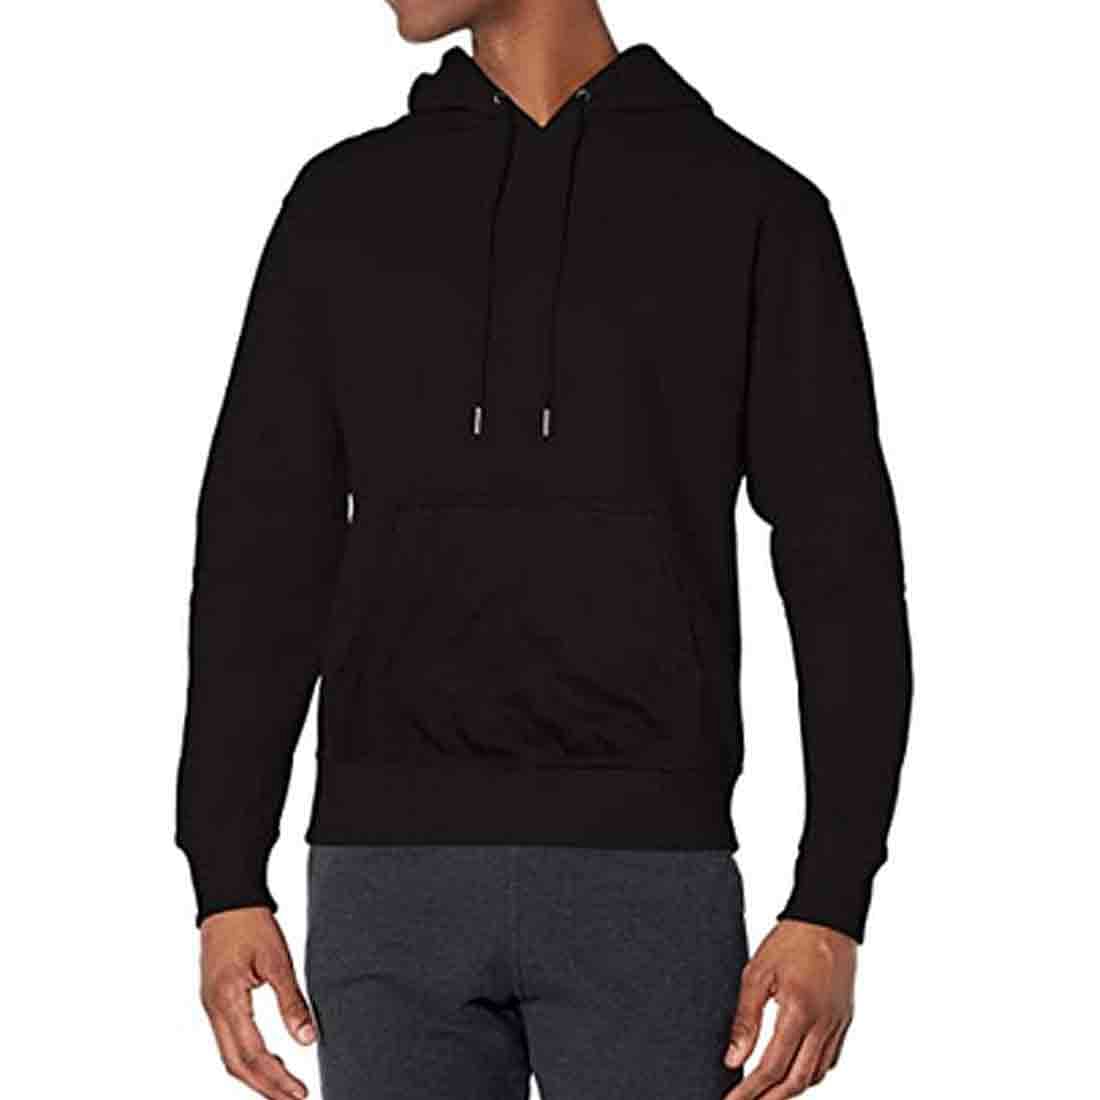 Nutcase stylish hoodie sweatshirt Unisex - Cute Nutcase